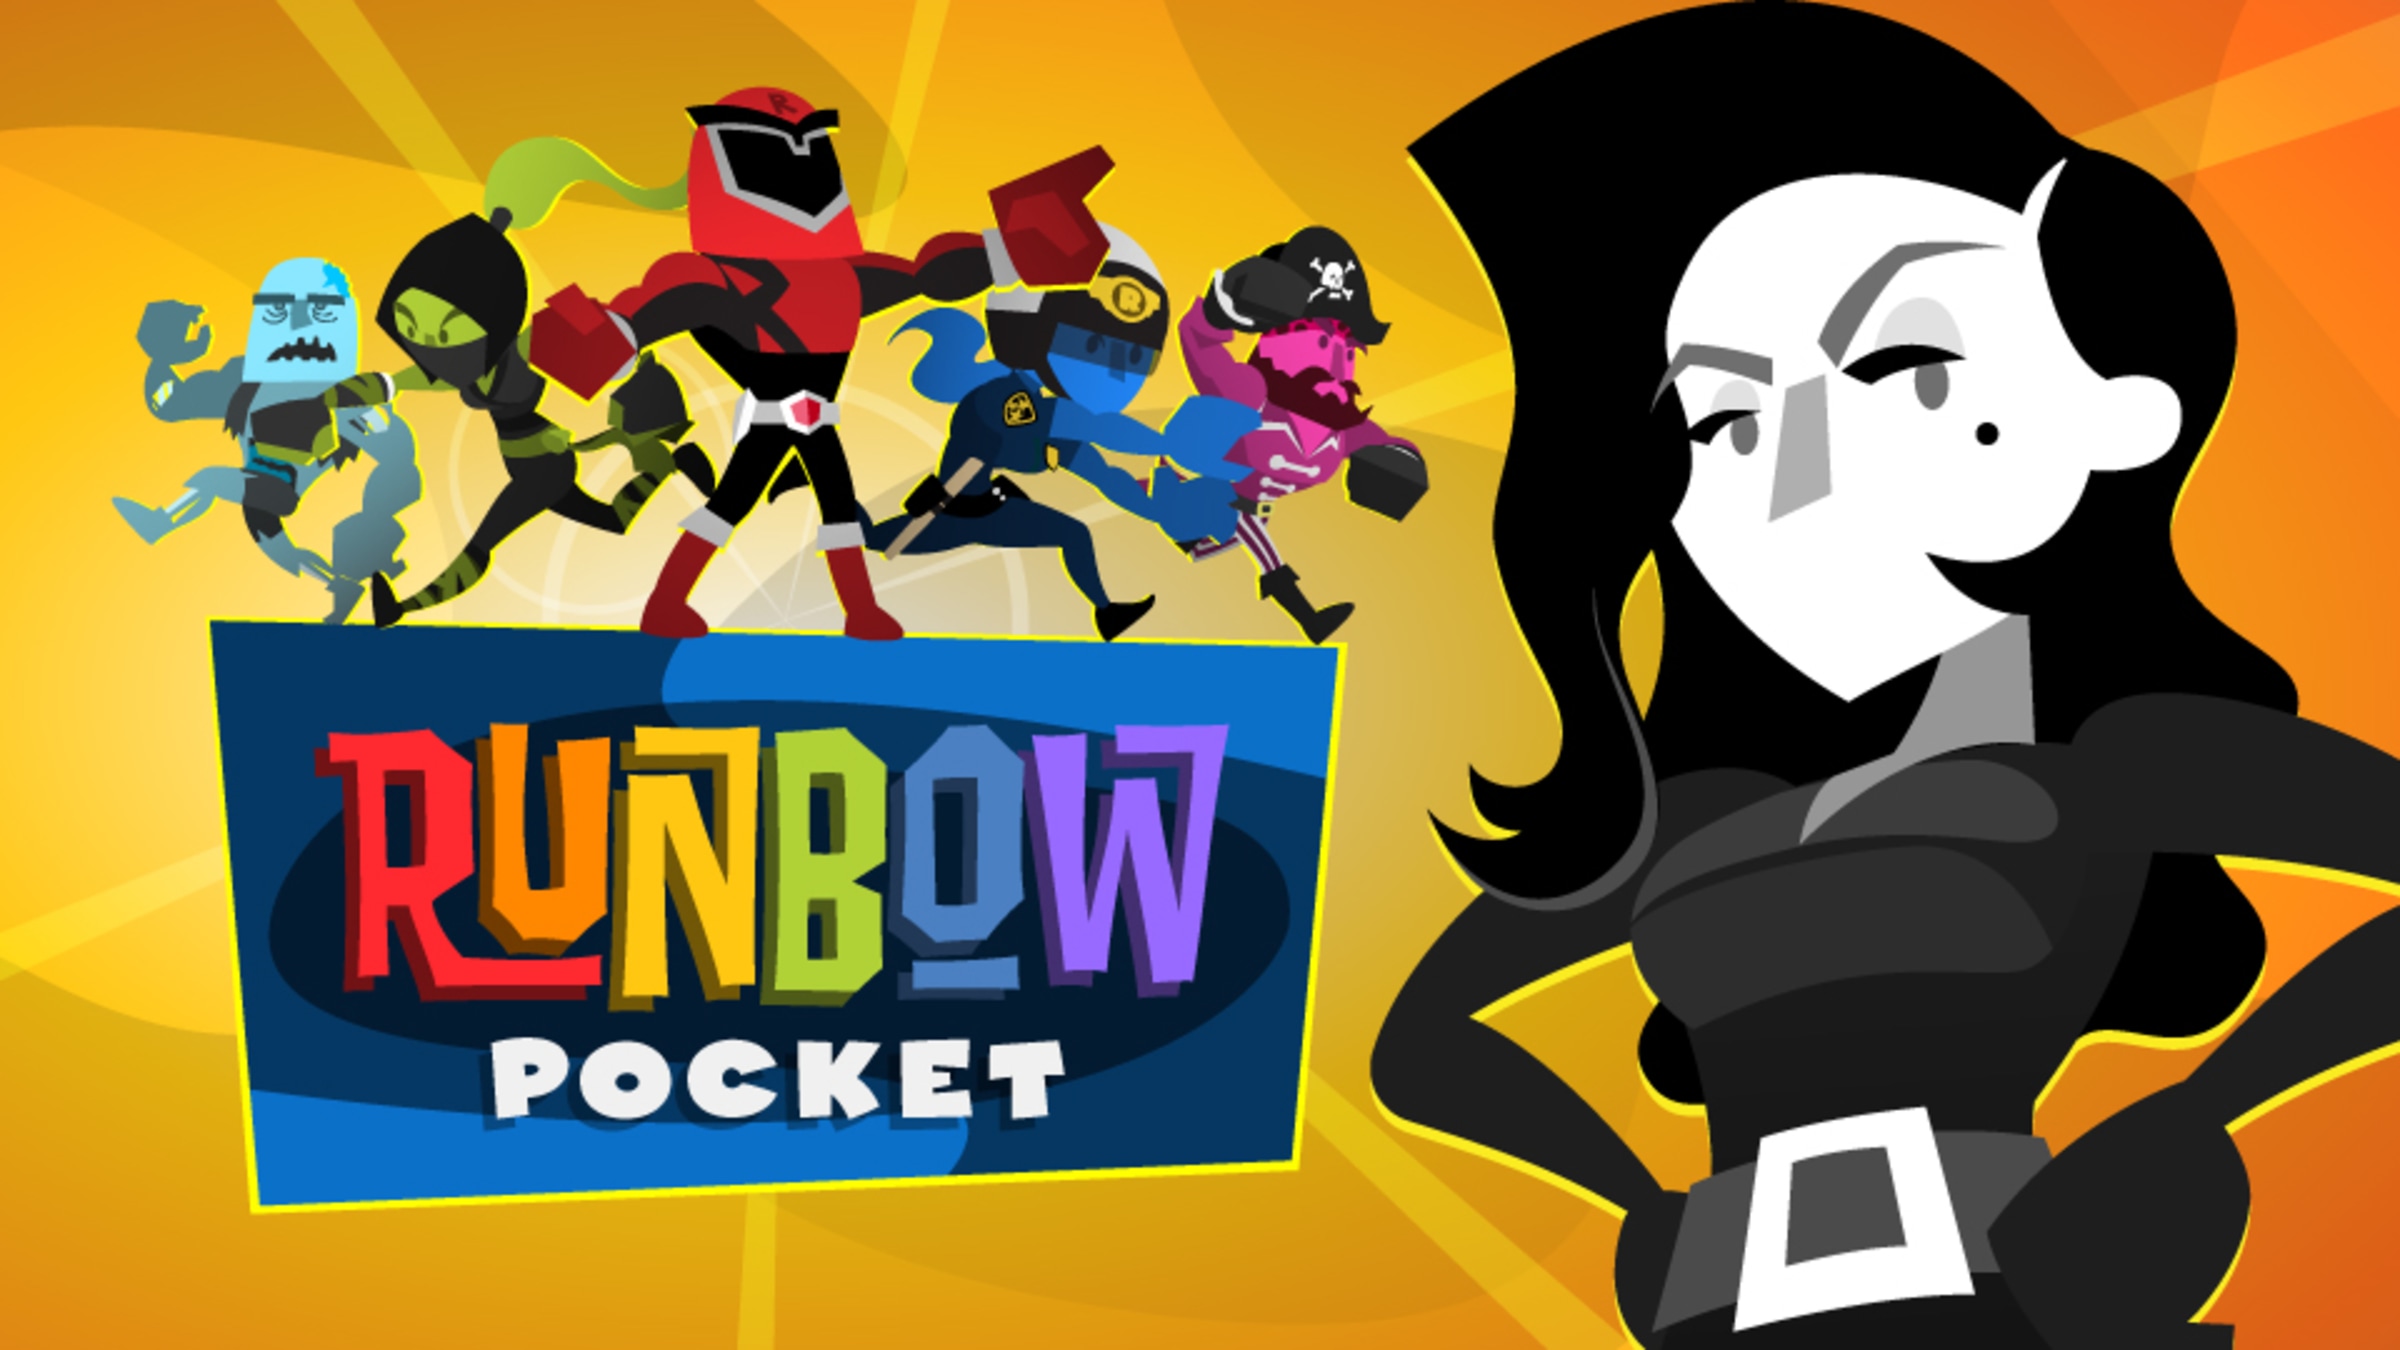 Runbow Pocket (3DS) [Digital] - $2.99 (80% off) at Nintendo eShop